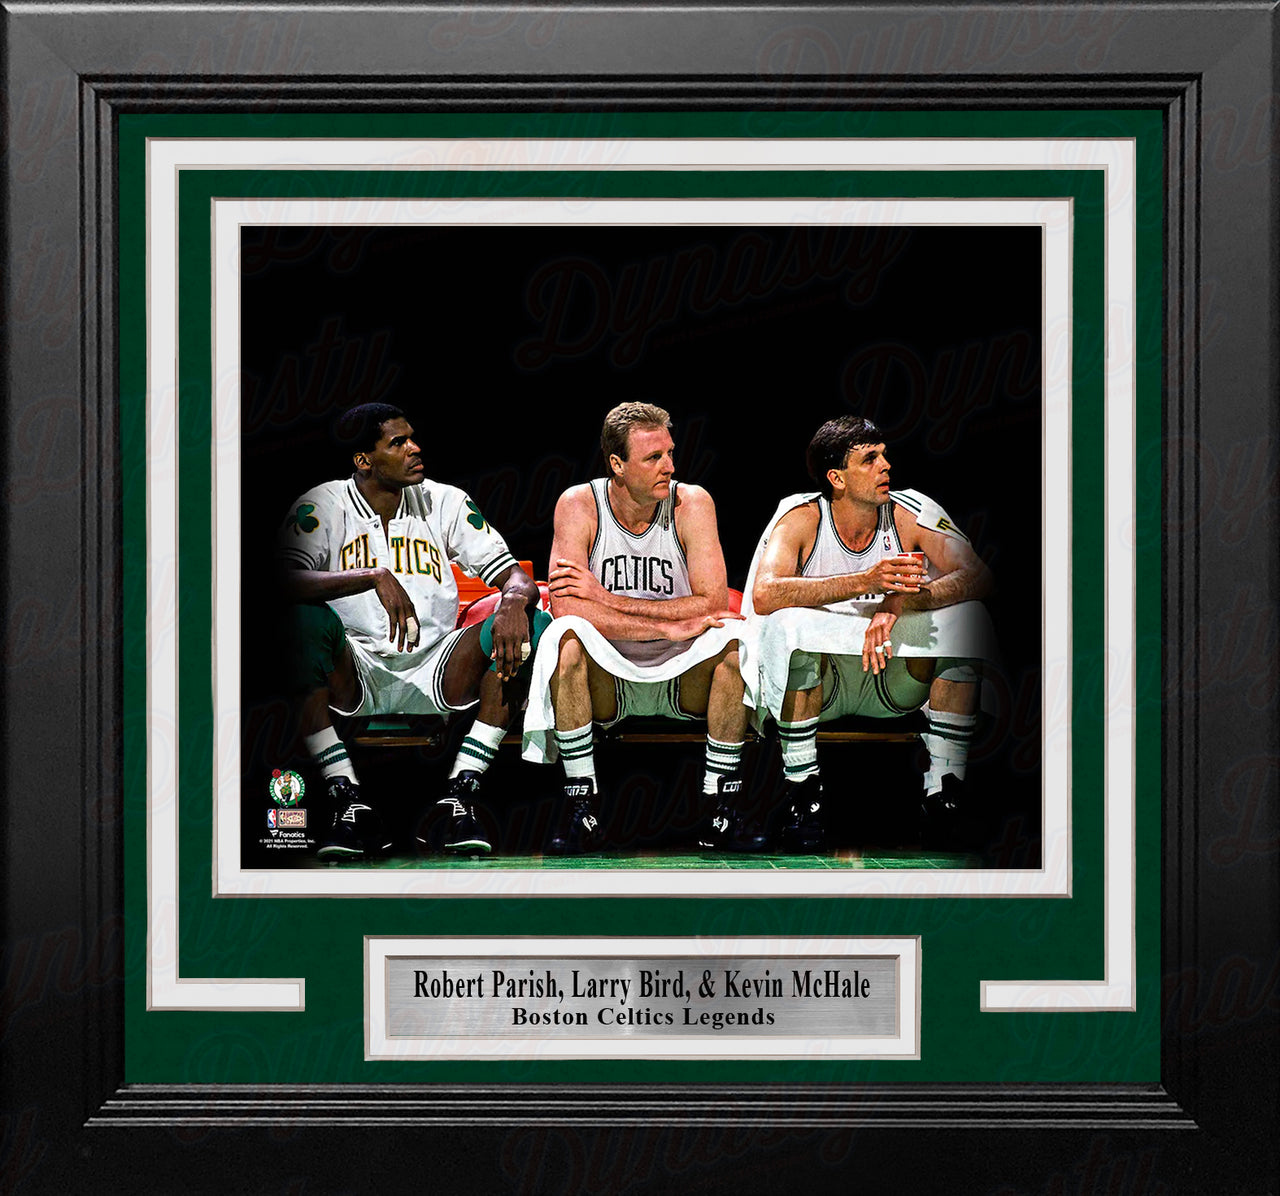 Robert Parish, Larry Bird, & Kevin McHale Boston Celtics 8" x 10" Framed Basketball Photo - Dynasty Sports & Framing 